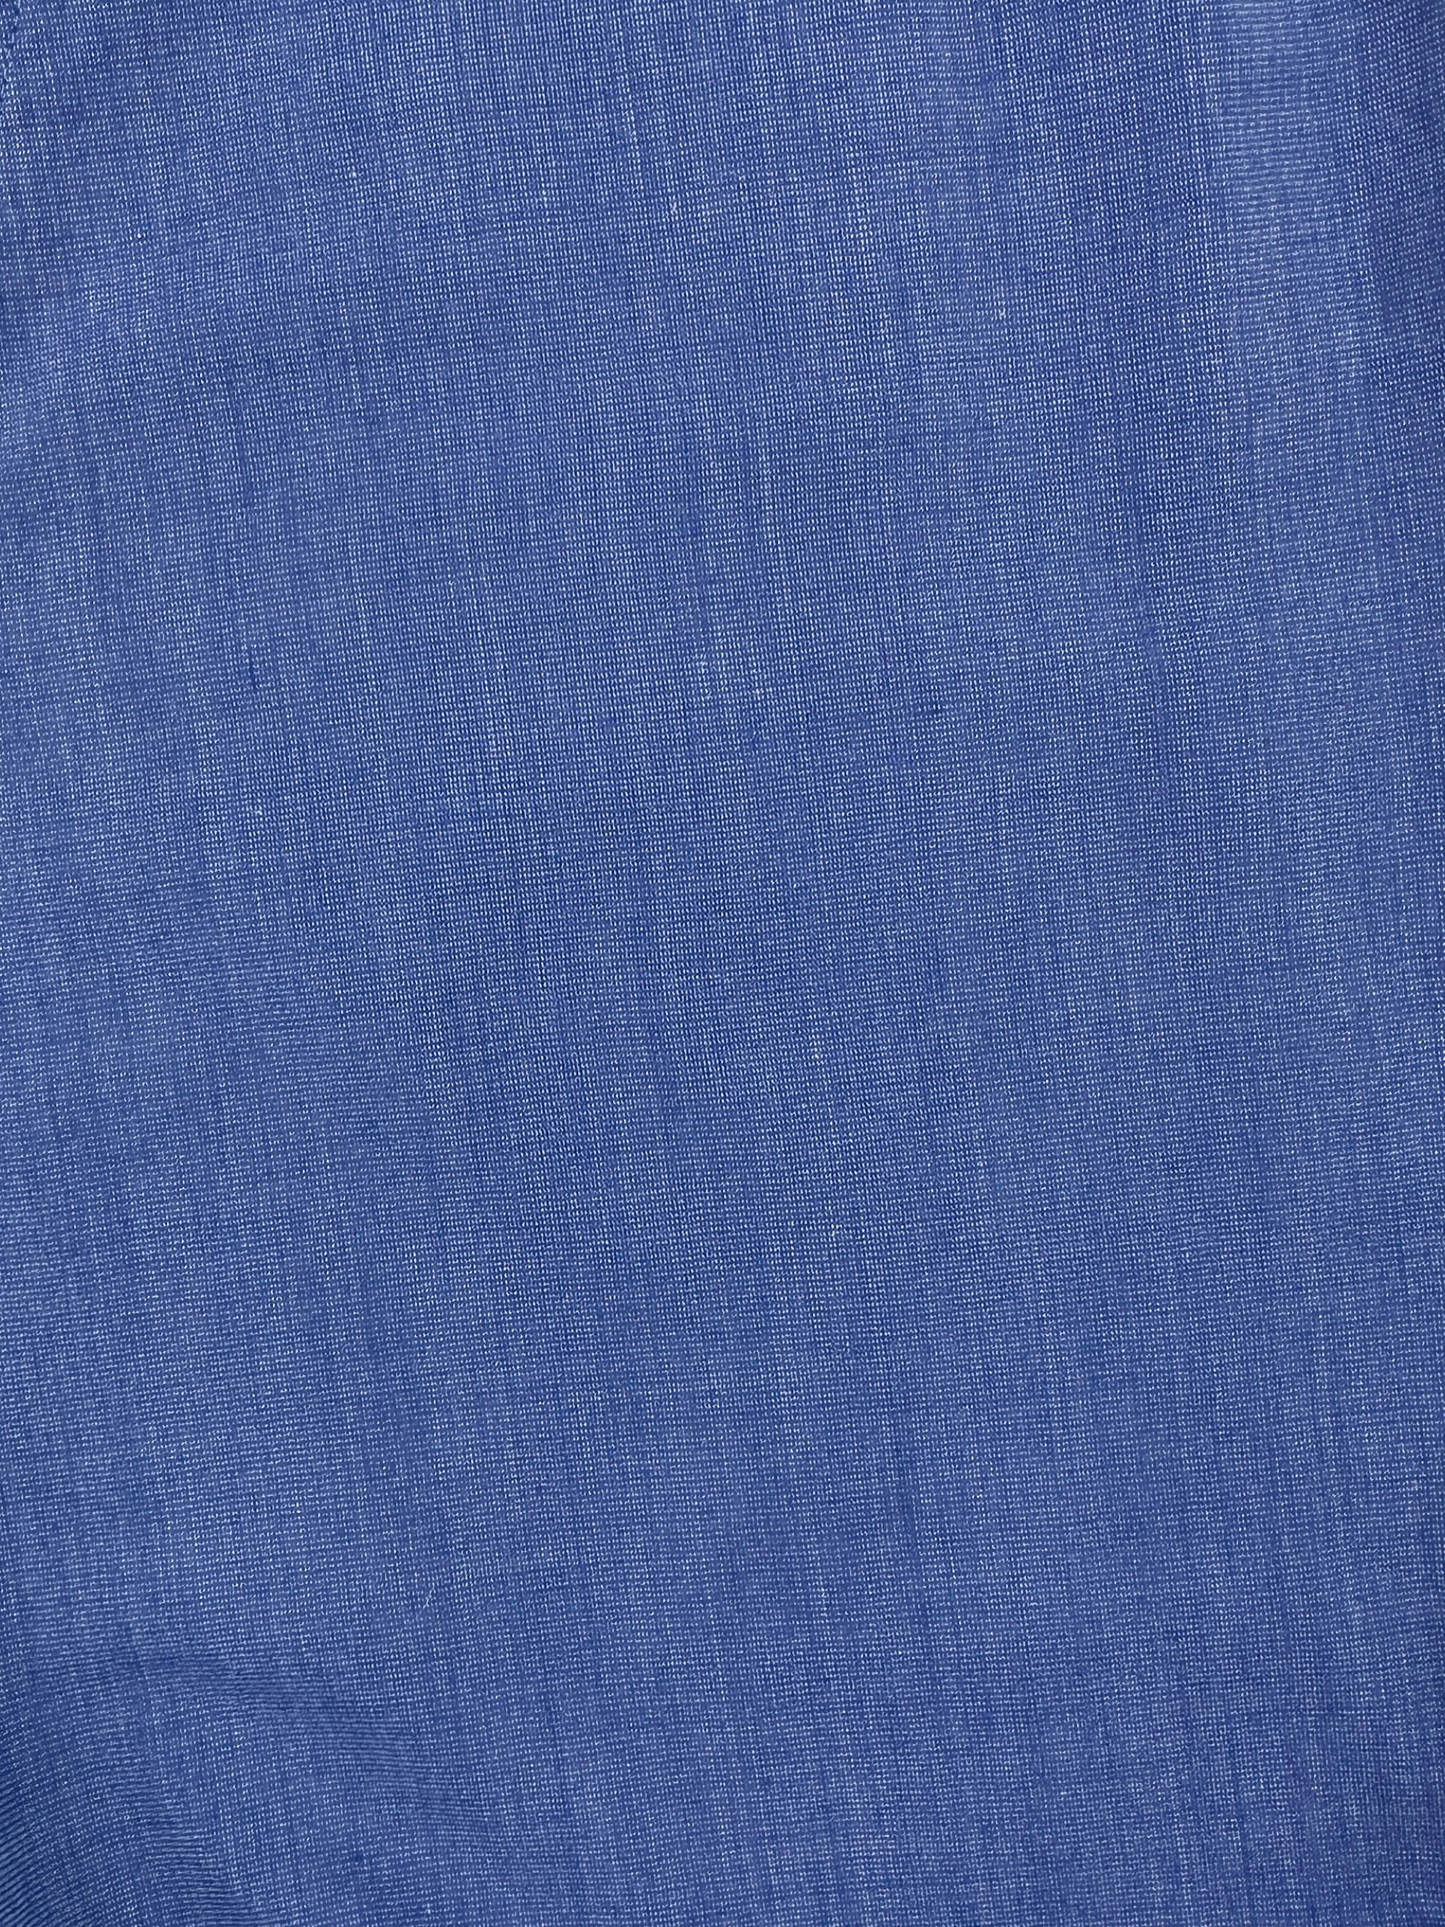 Bungee Shirt Medium Blue Size M/L